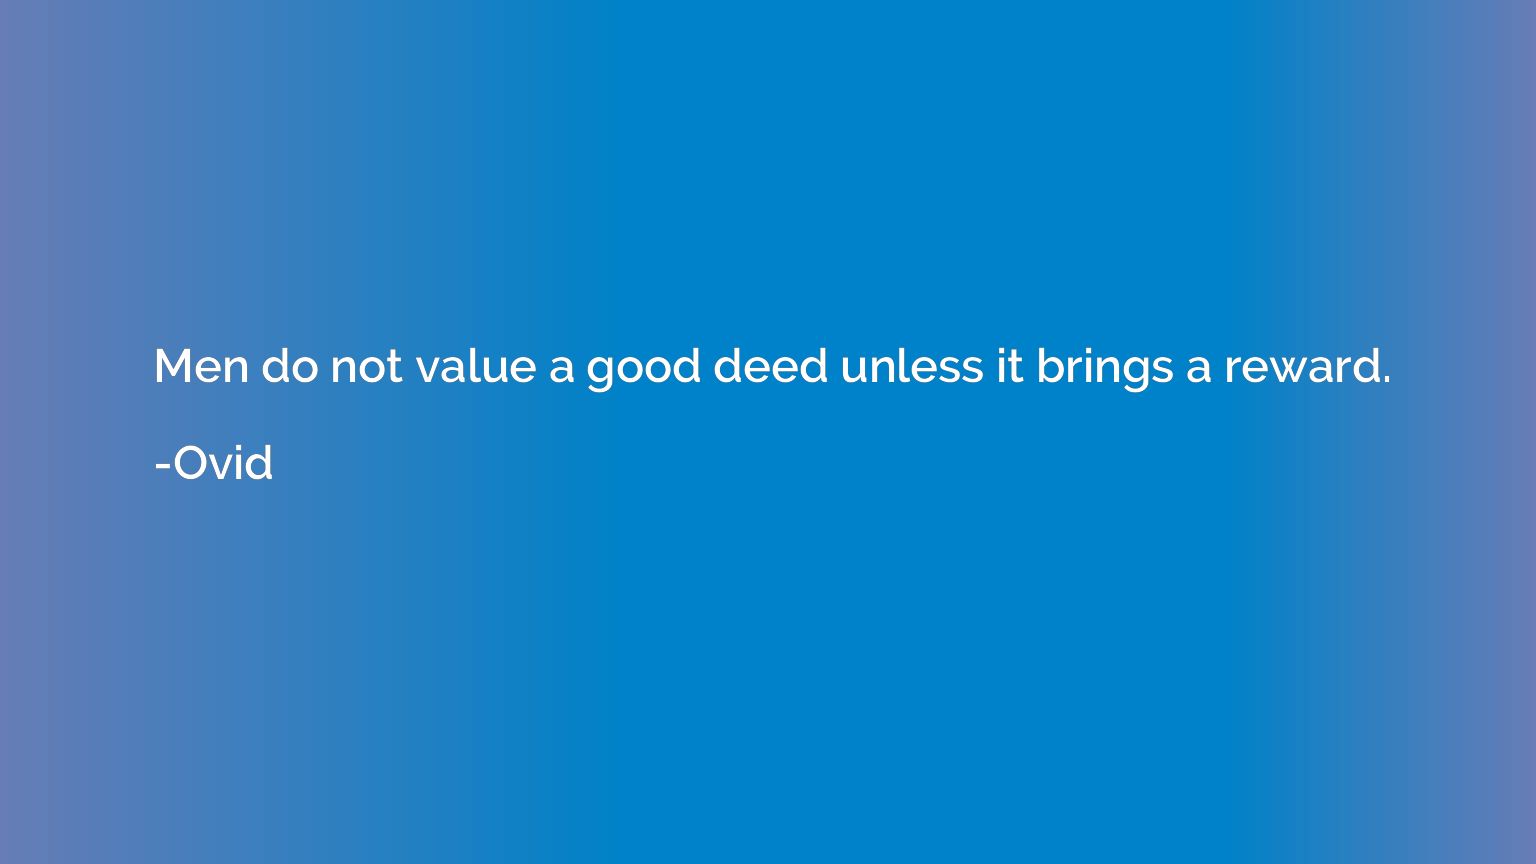 Men do not value a good deed unless it brings a reward.